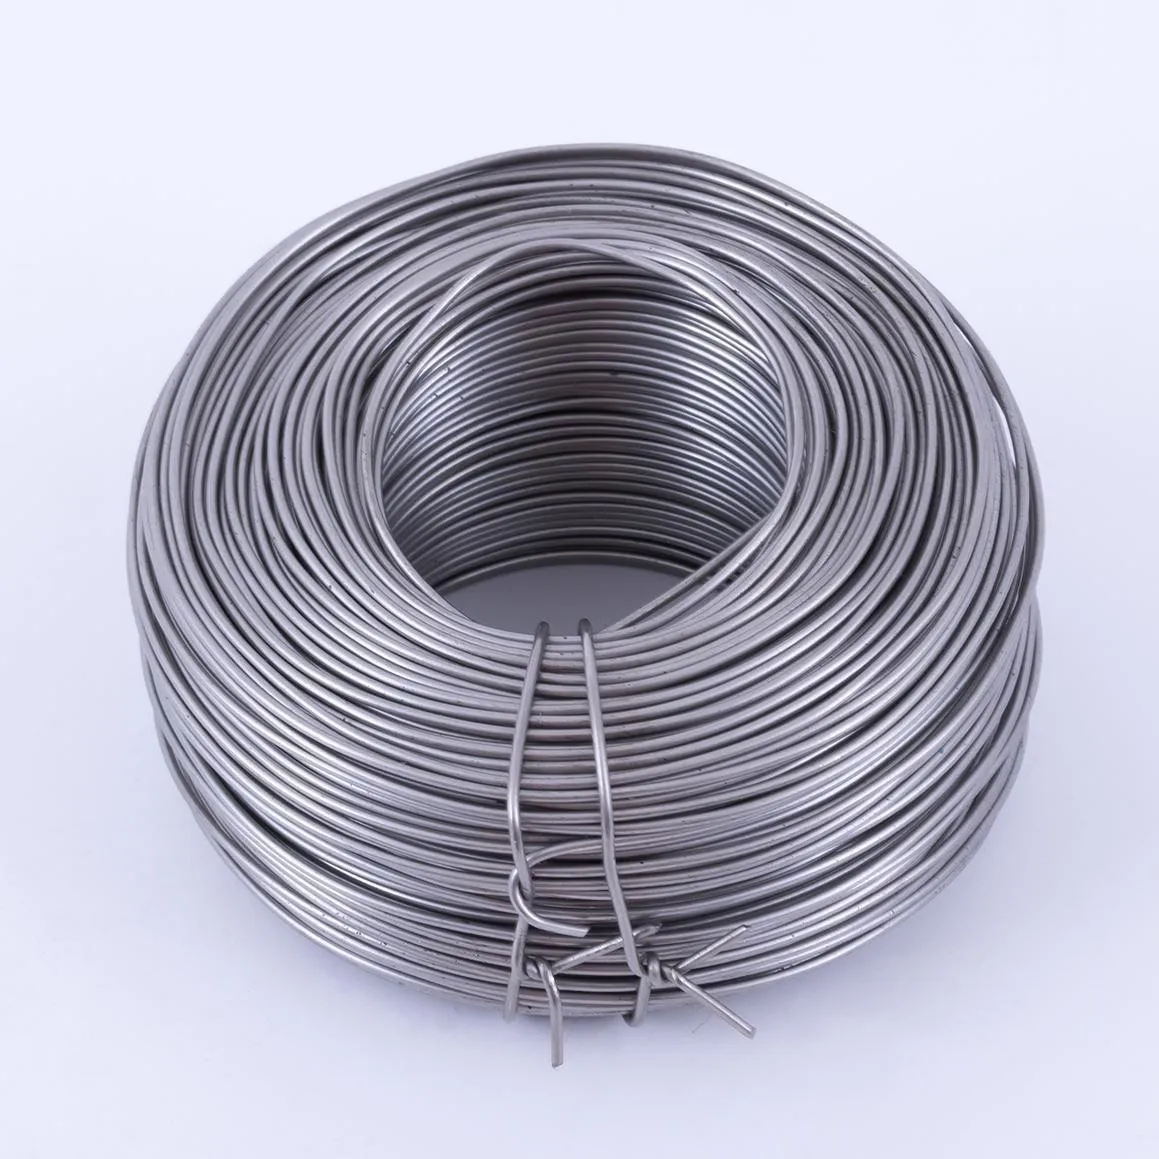 Проволока изготовляется. Stainless Steel wire Rope 316l. Проволока thermon SS Tie wire 10057. Проволока ss304 0,12мм. Проволока AISI 316l - 2.2x2mm.